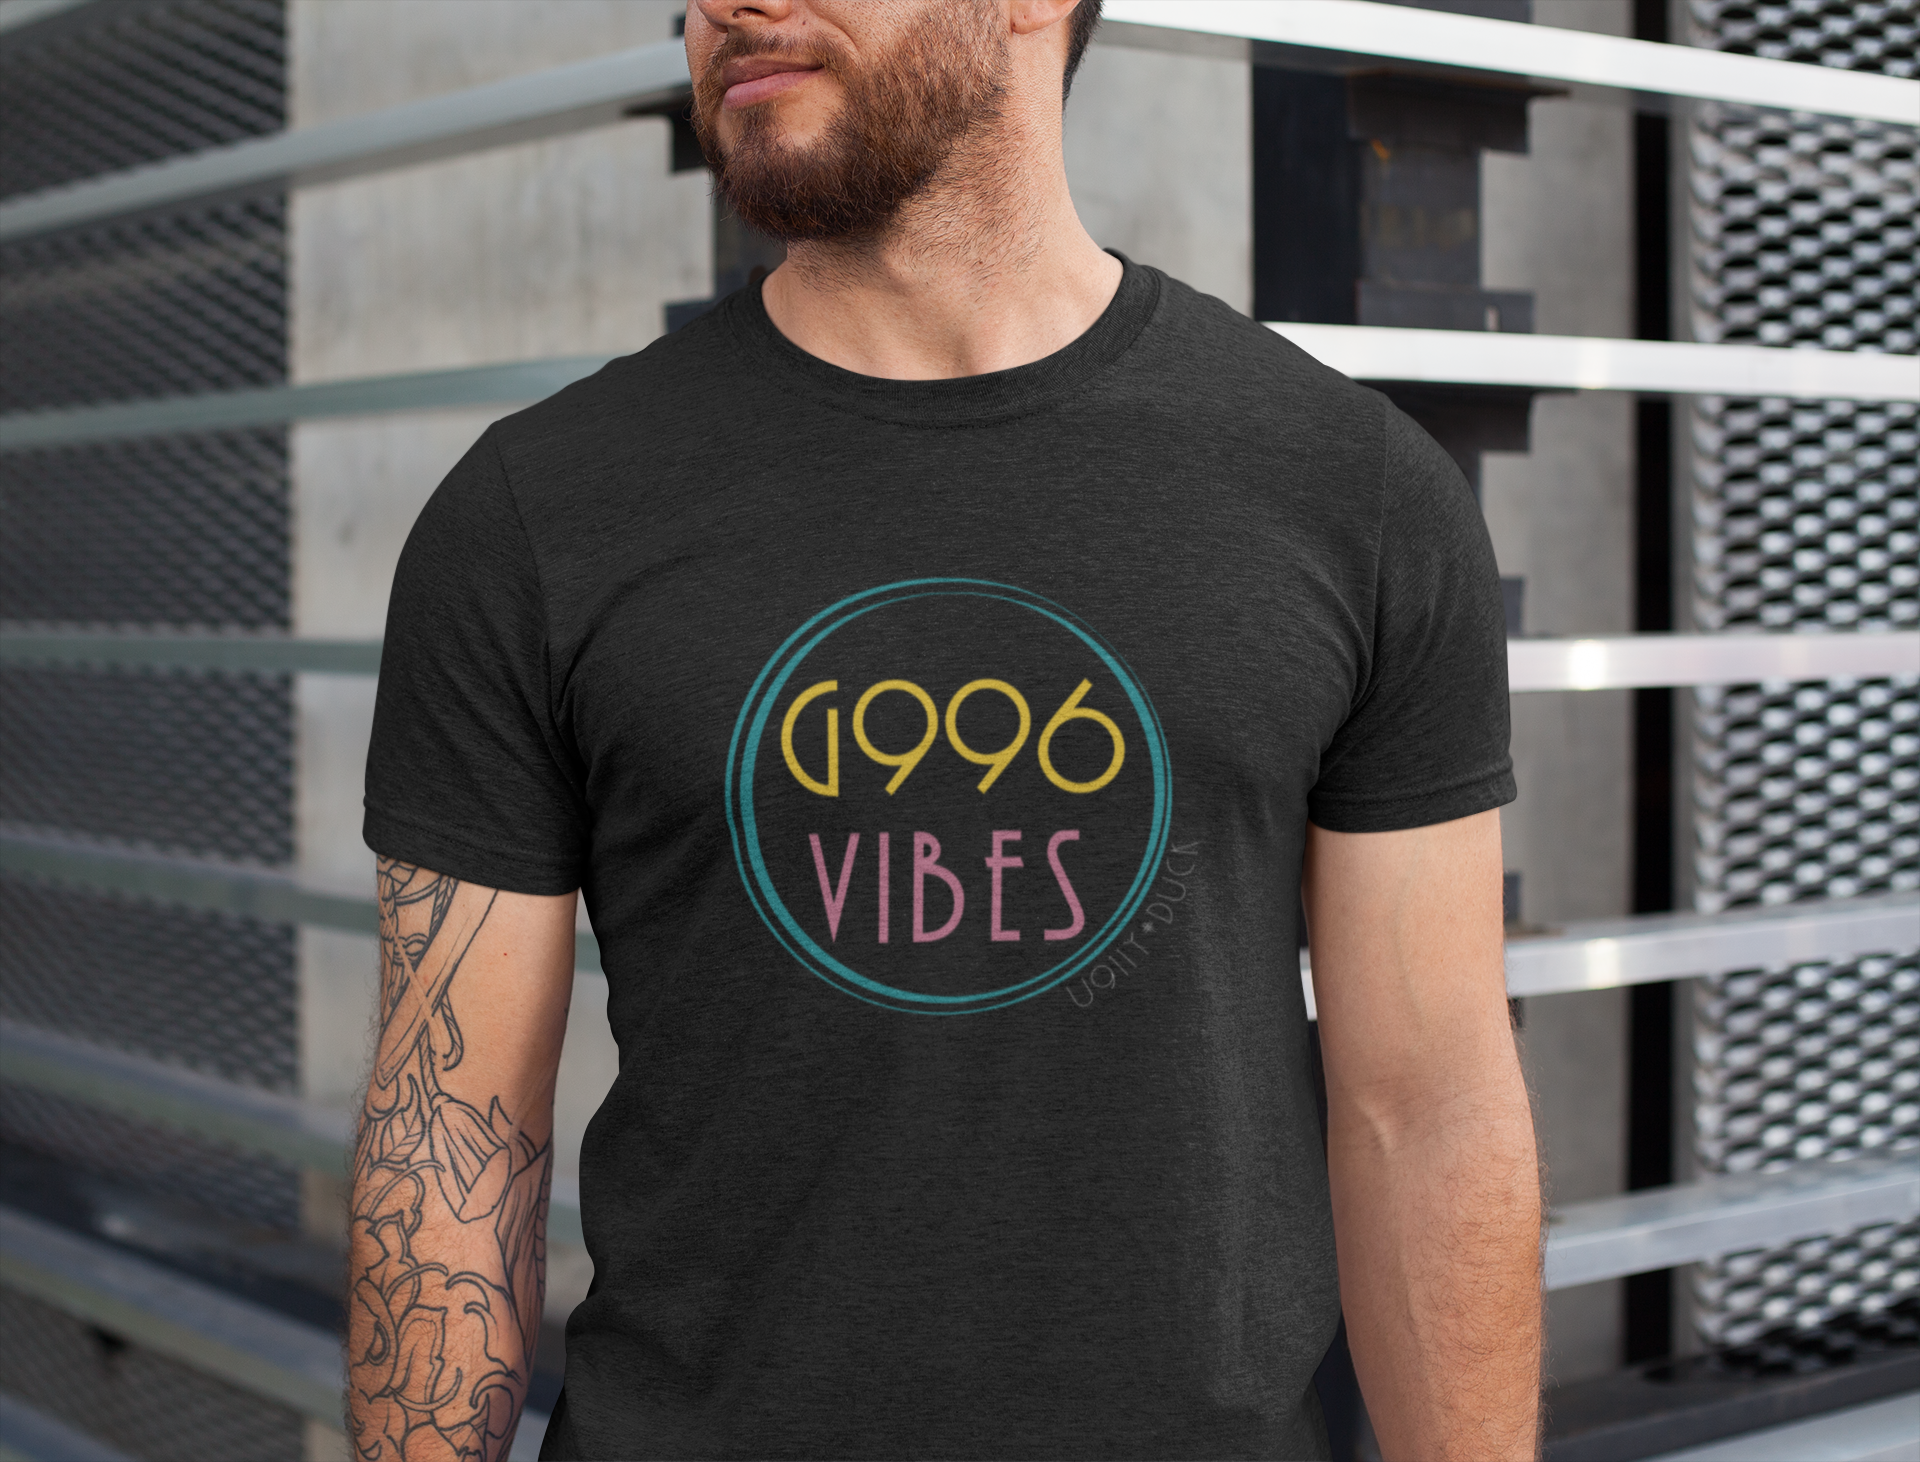 G996 VIBES Organic Jersey Adult T-Shirt